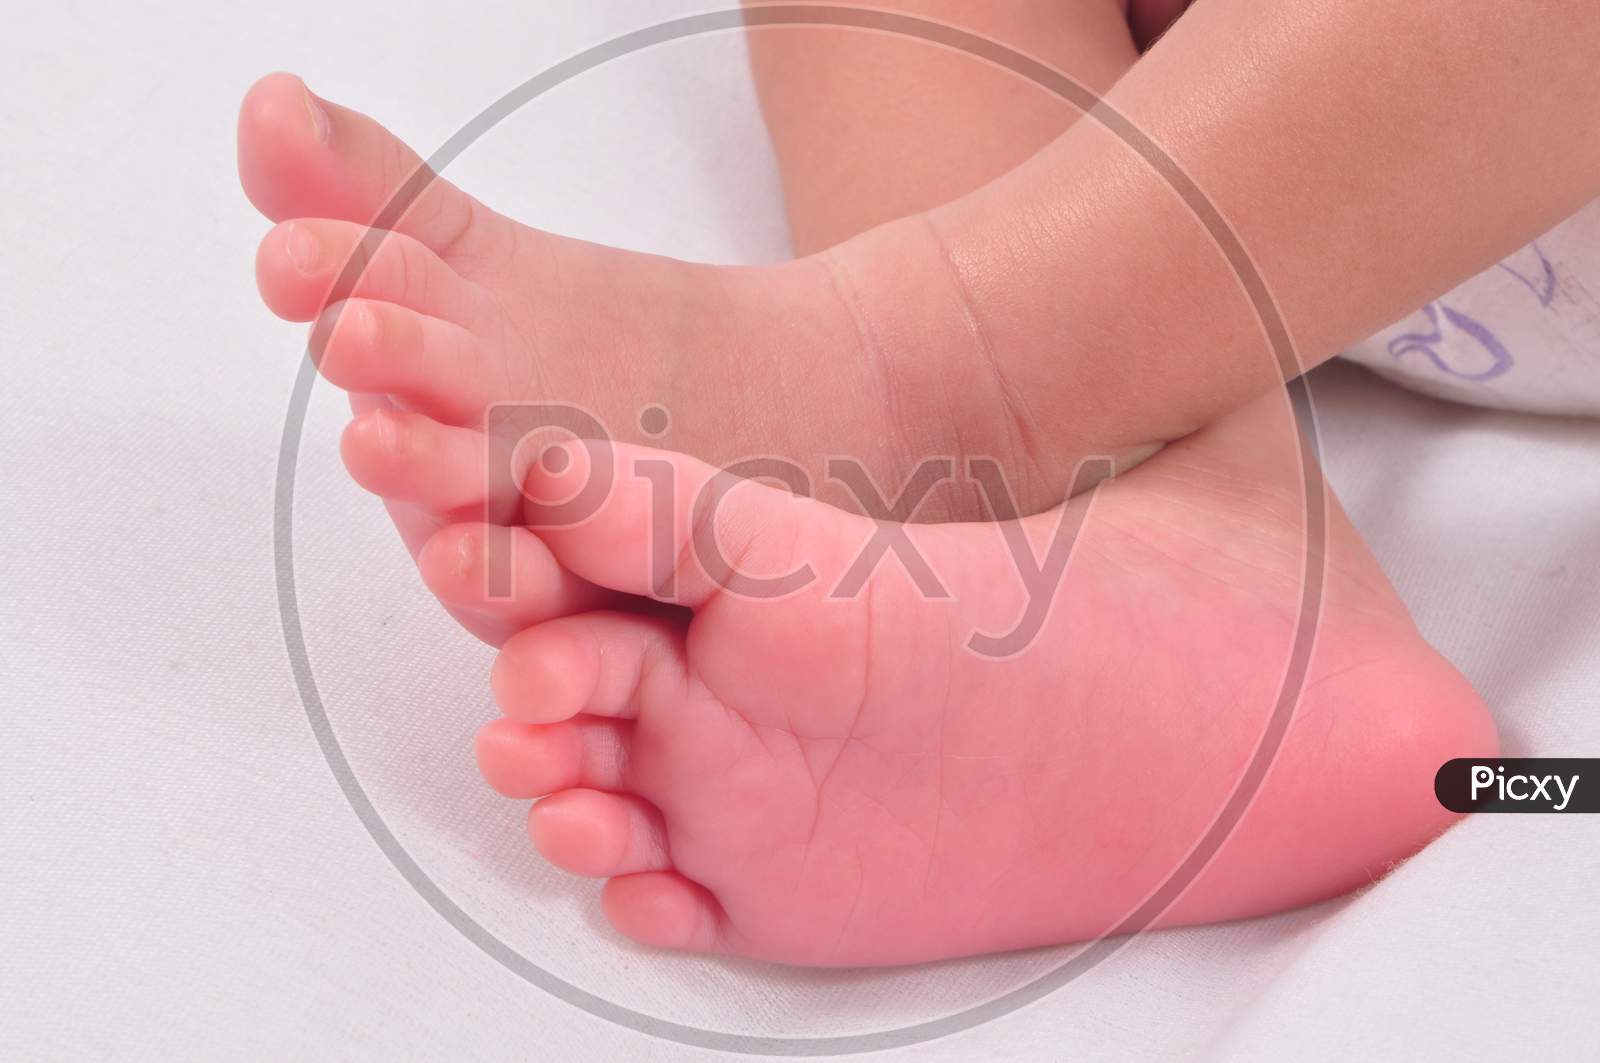 Baby Feet Crossed While Sleeping.